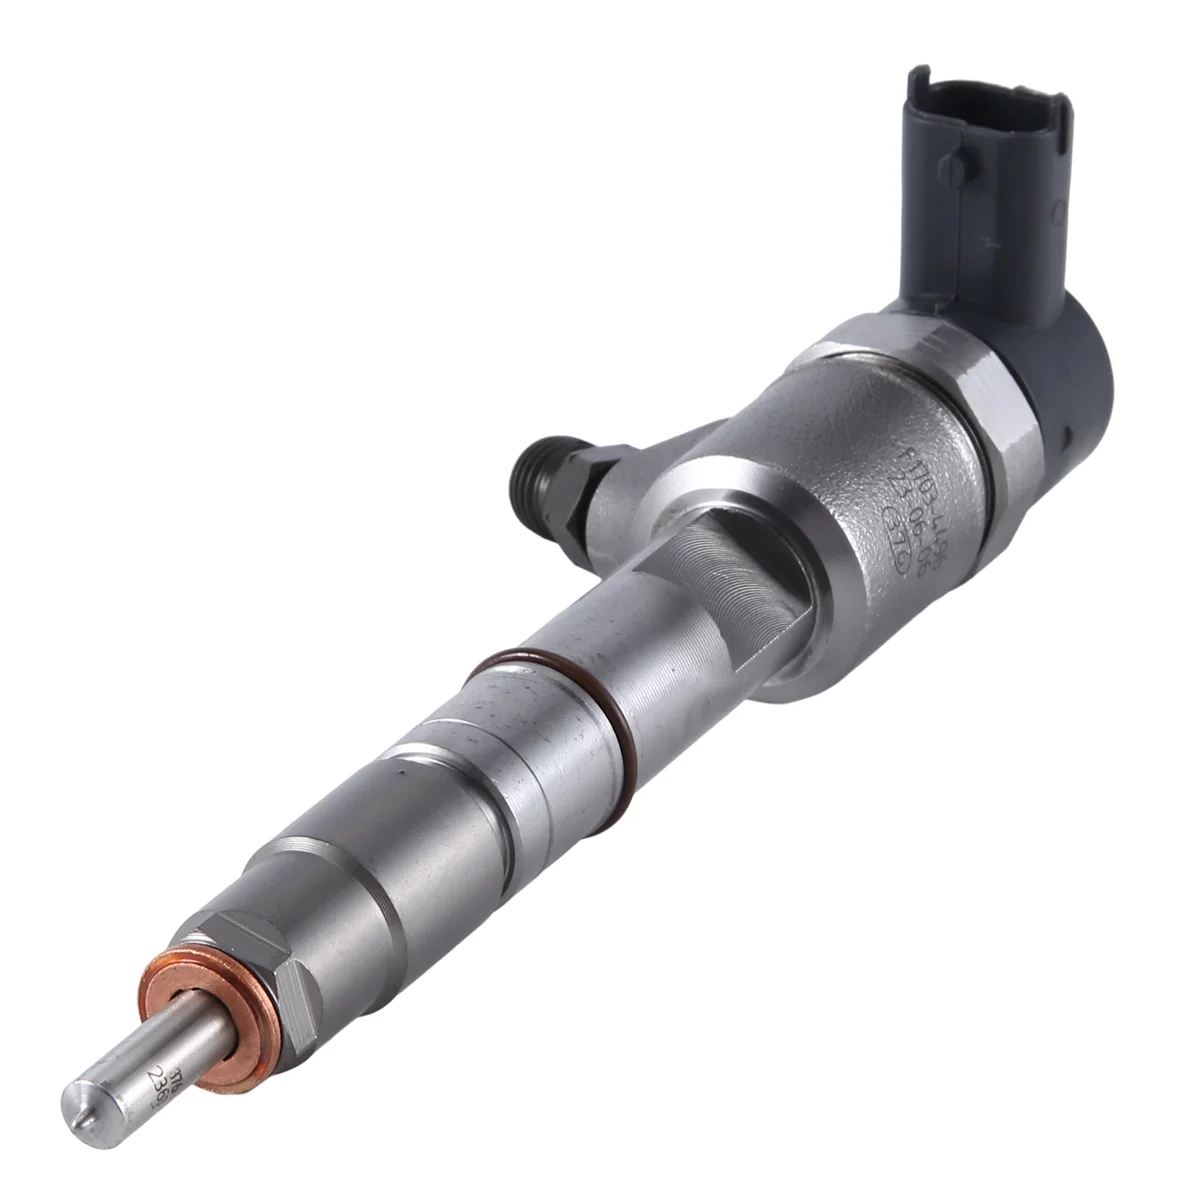 

0445110516 New Common Rail Diesel Fuel Injector Nozzle for YANGCHAI